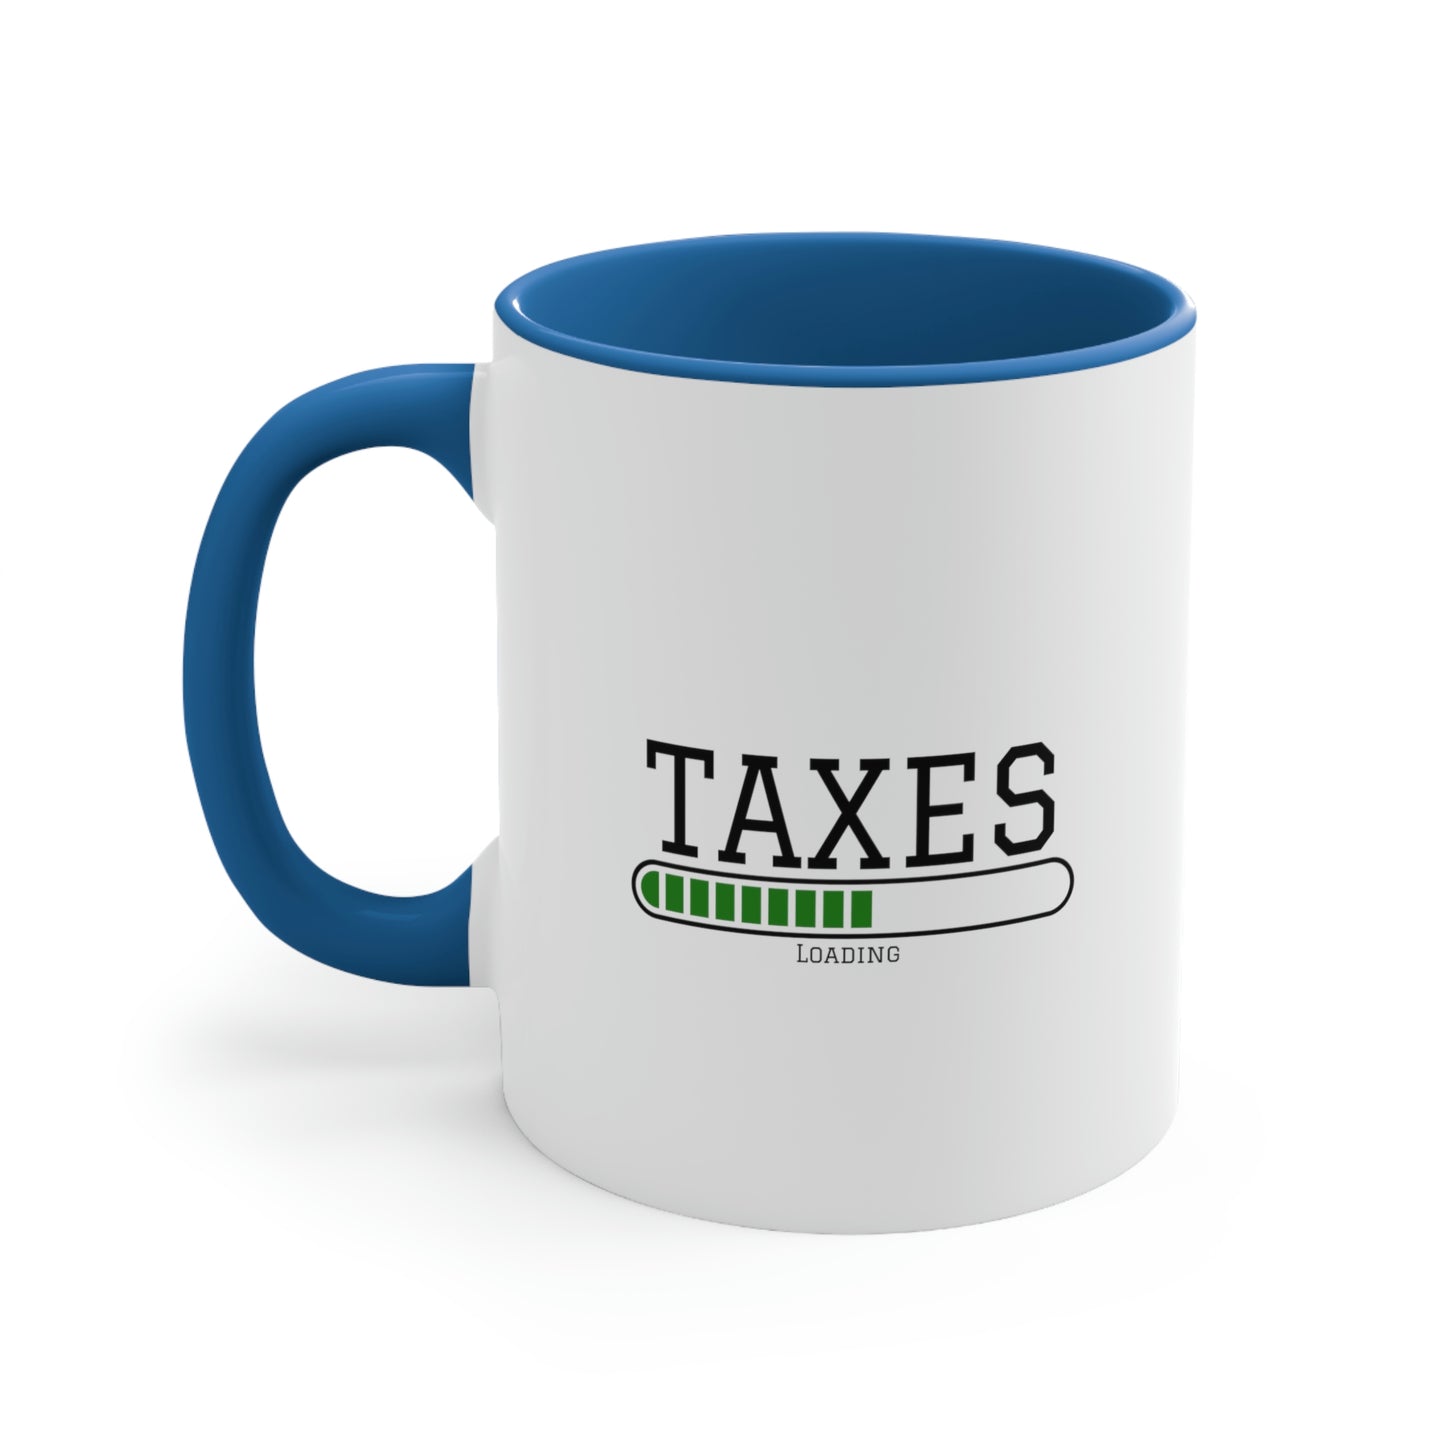 Taxes Loading | Accountant Coffee Mug